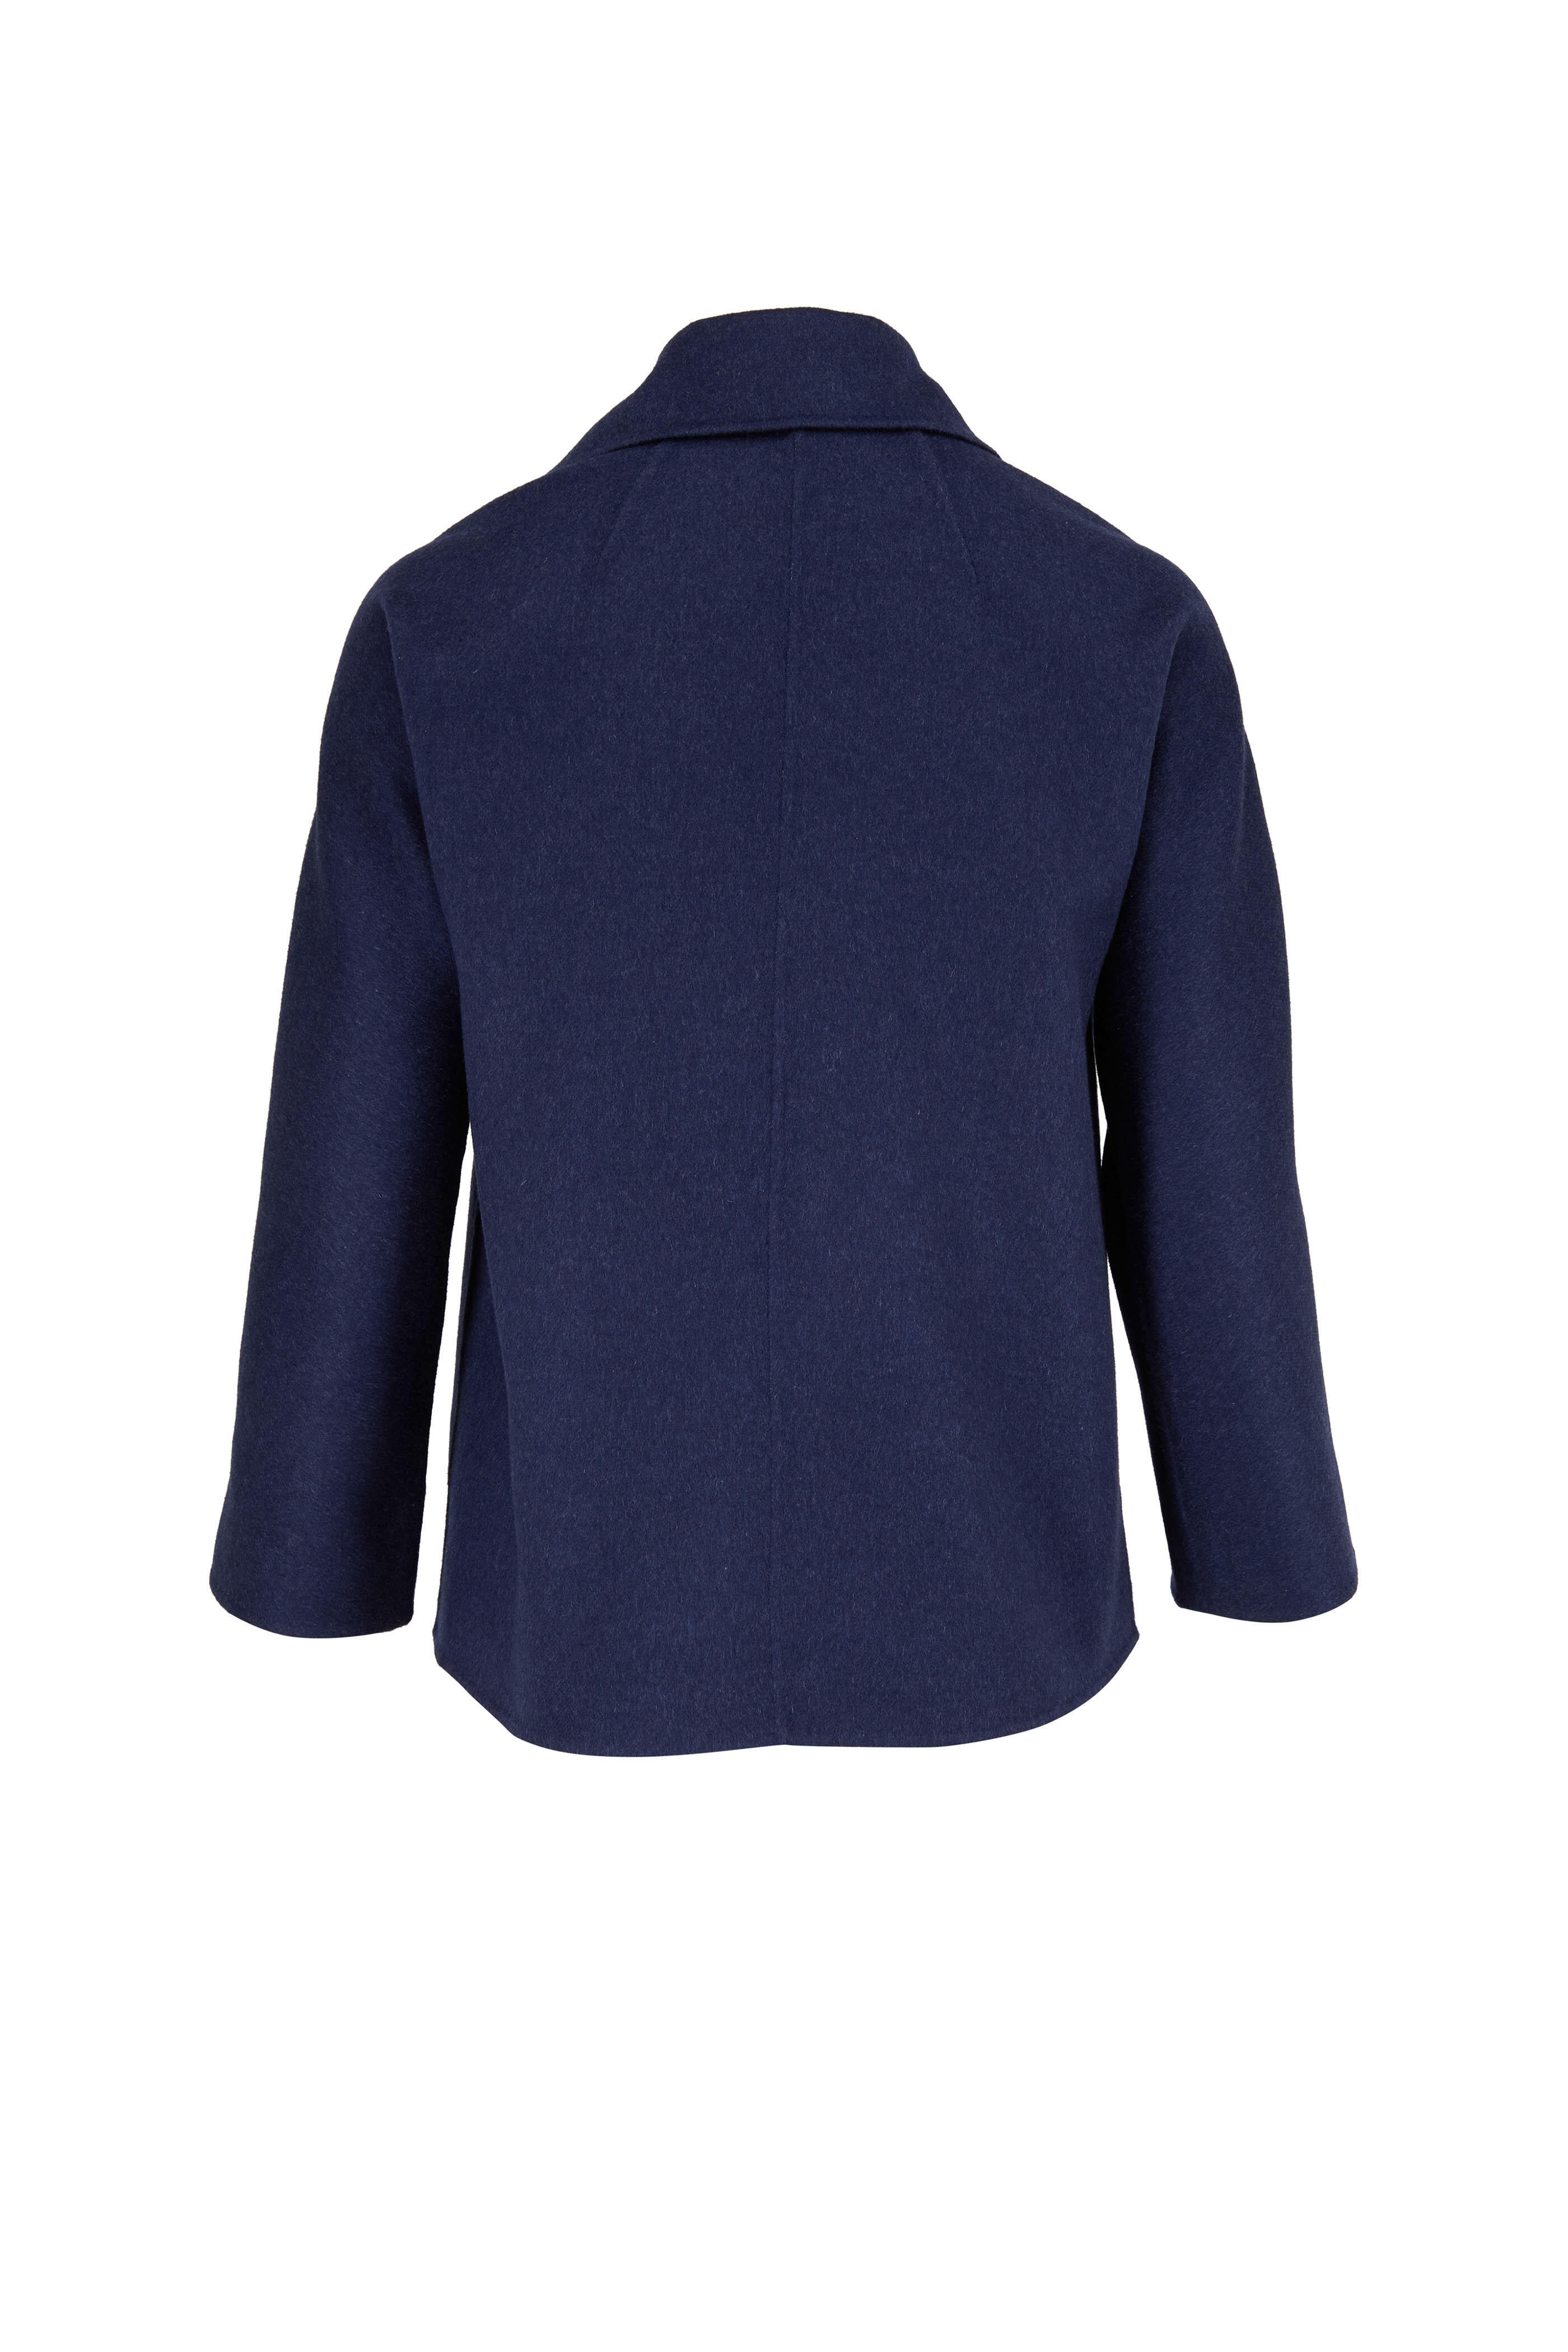 Notch Collar Jacket - Kinross Cashmere